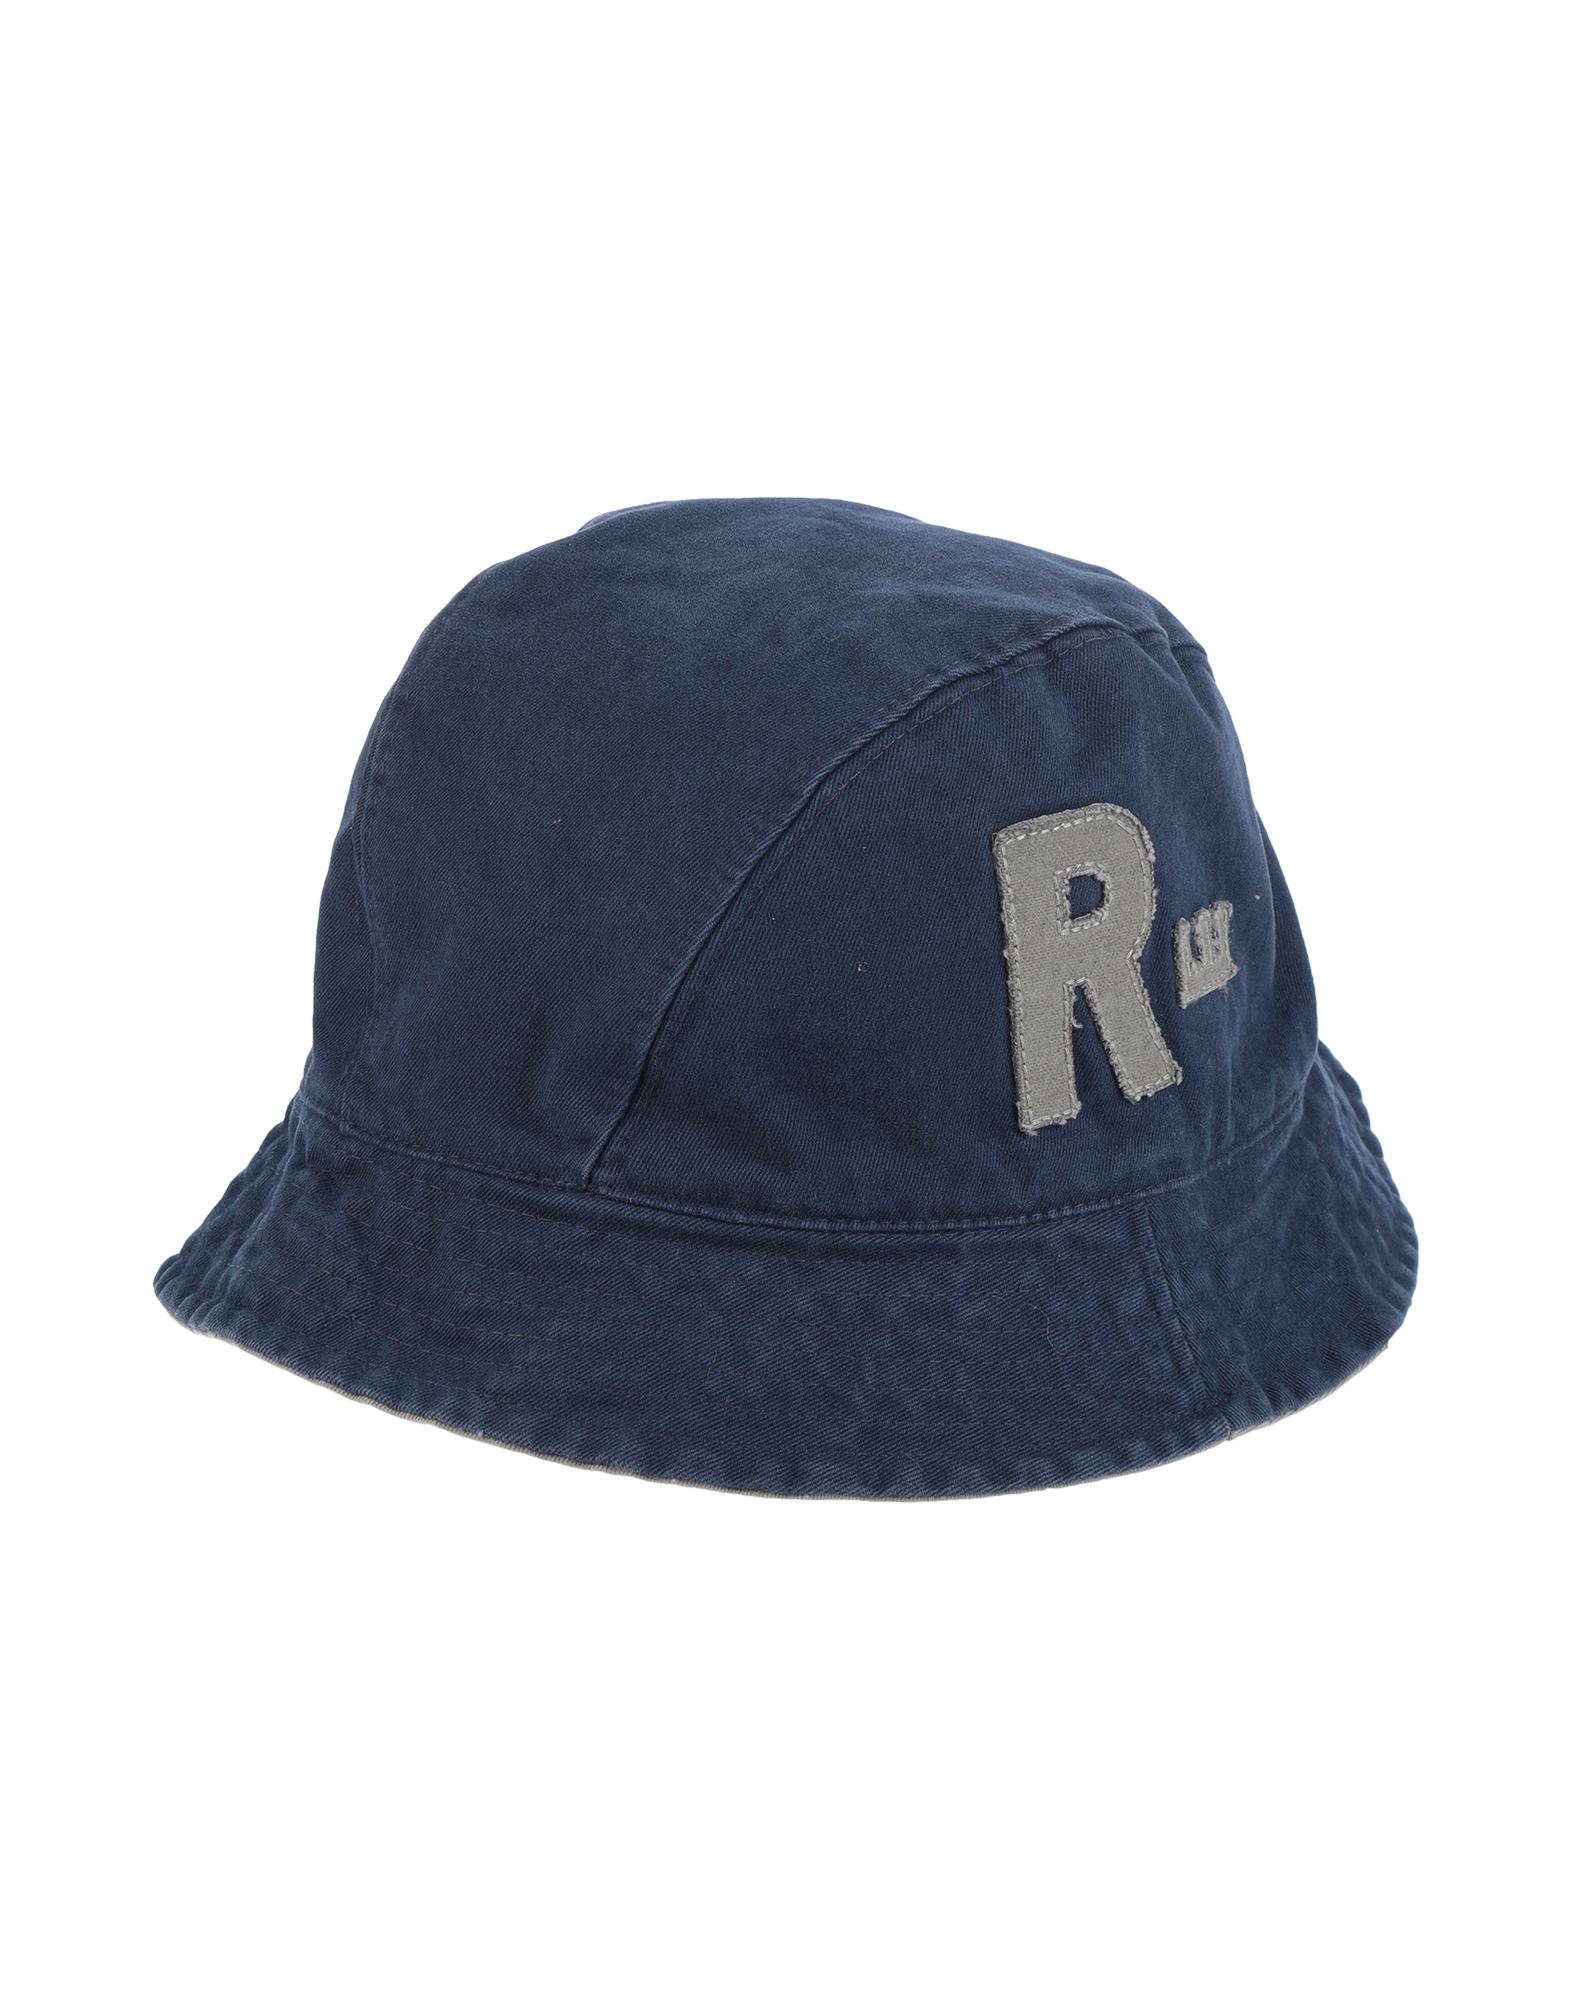 REPLAY Hats - Item 46731985